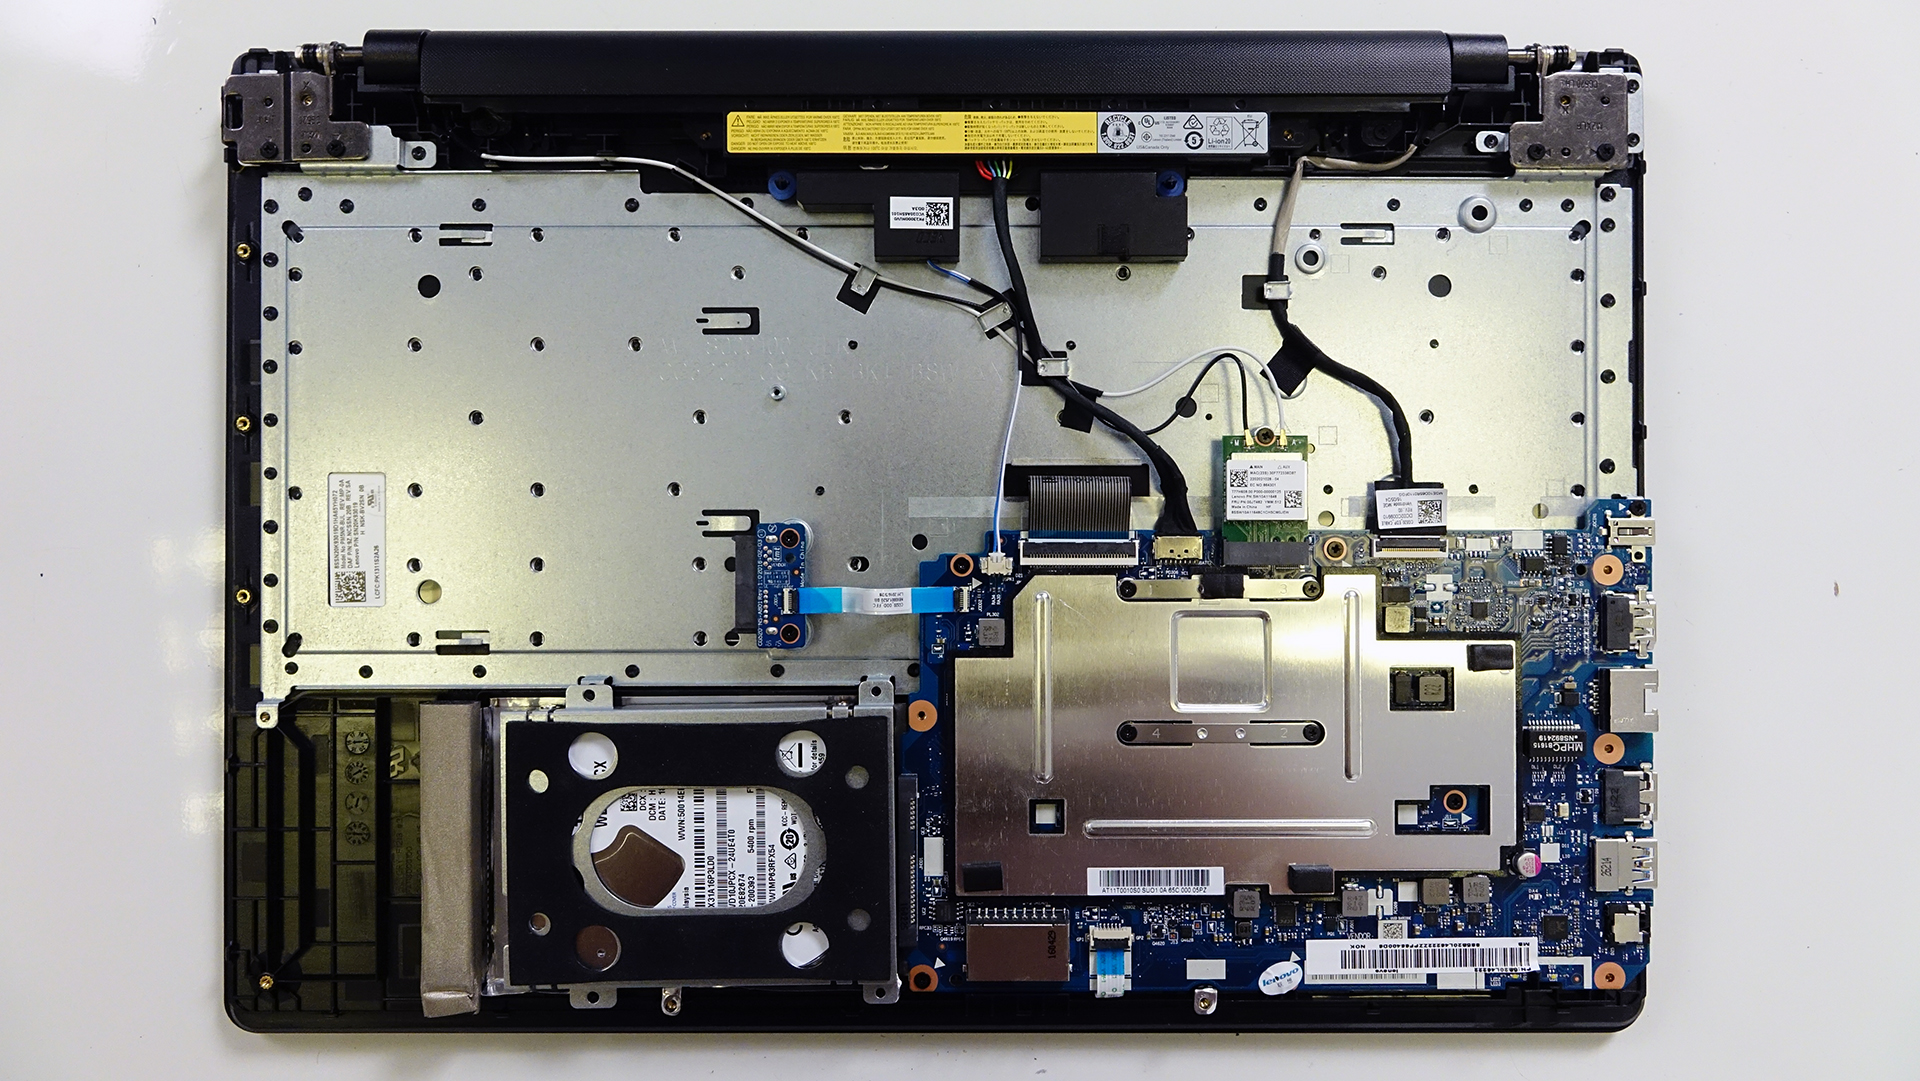 Inside Lenovo Ideapad 110 - disassembly, internal photos and upgrade  options 